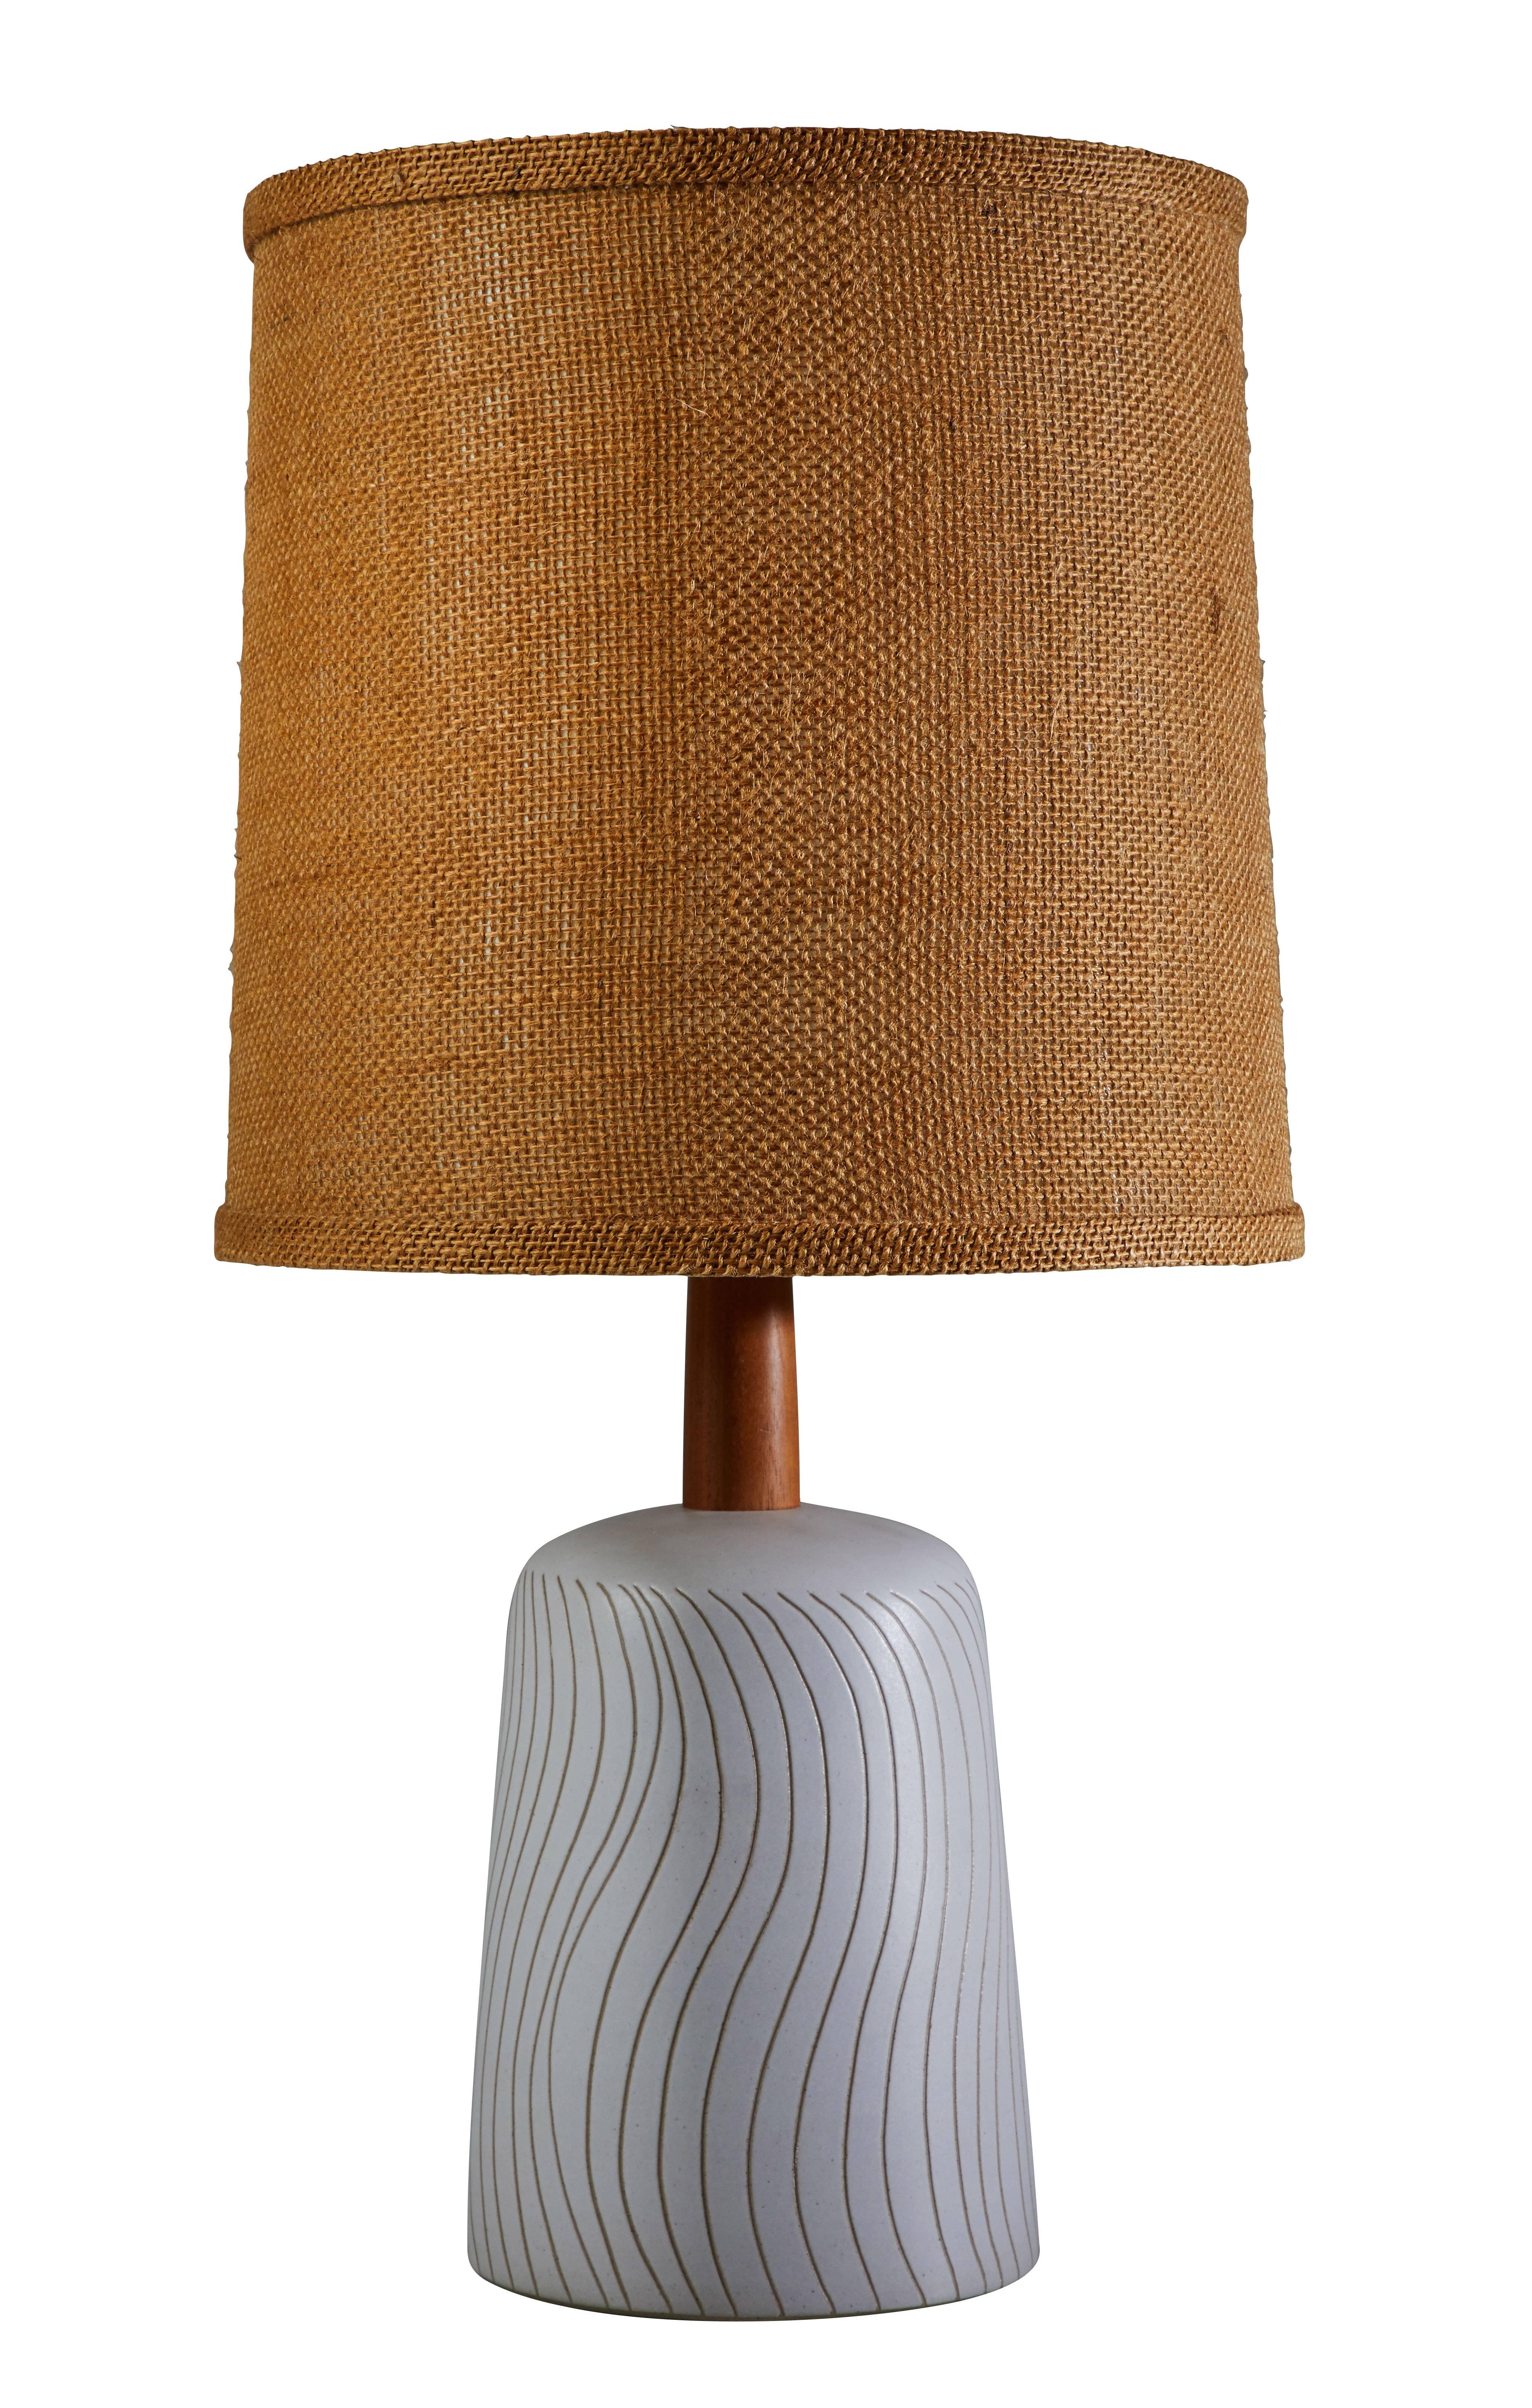 Ceramic studio table lamp by Gordon Martz designed and manufactured in the US.  Original burlap shade, wooden stem and finial. Sgraffito lines to base. Original cords. Retains original signature. Takes one E26 75w maximum bulb